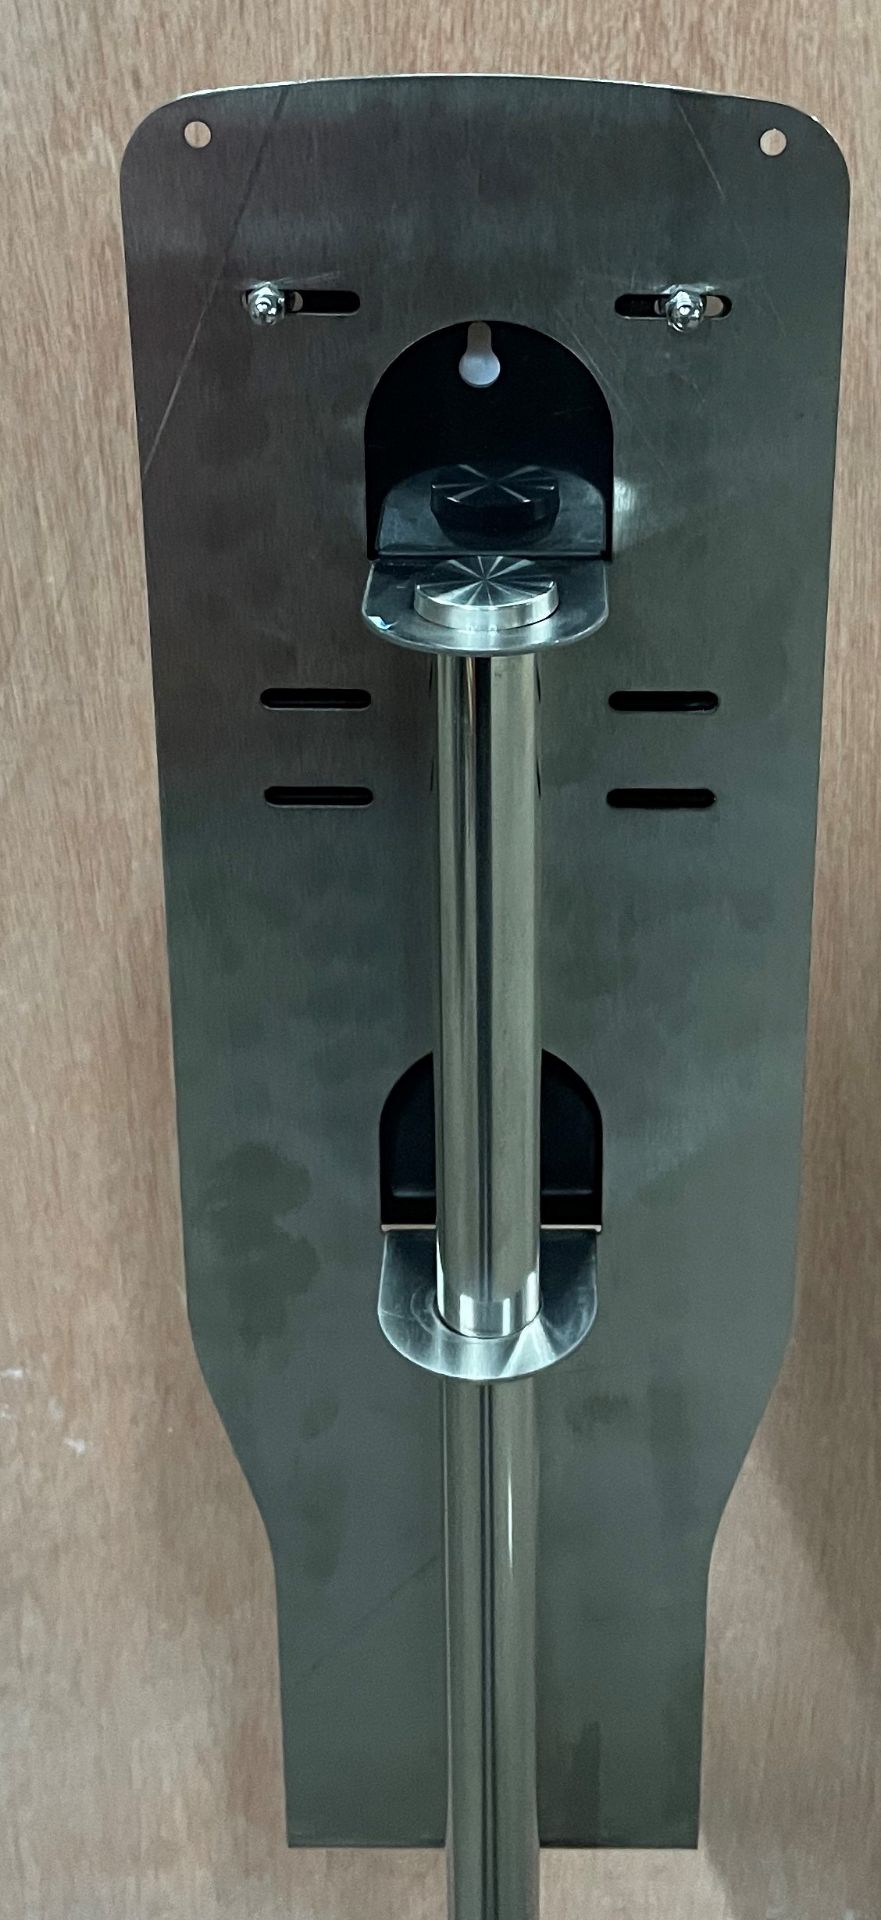 2x HCI Metal Sanitizer Stands | HCI Liquid Bottle Styled Soap Dispensers |HCI 2/4 Metal Bases - Image 16 of 17